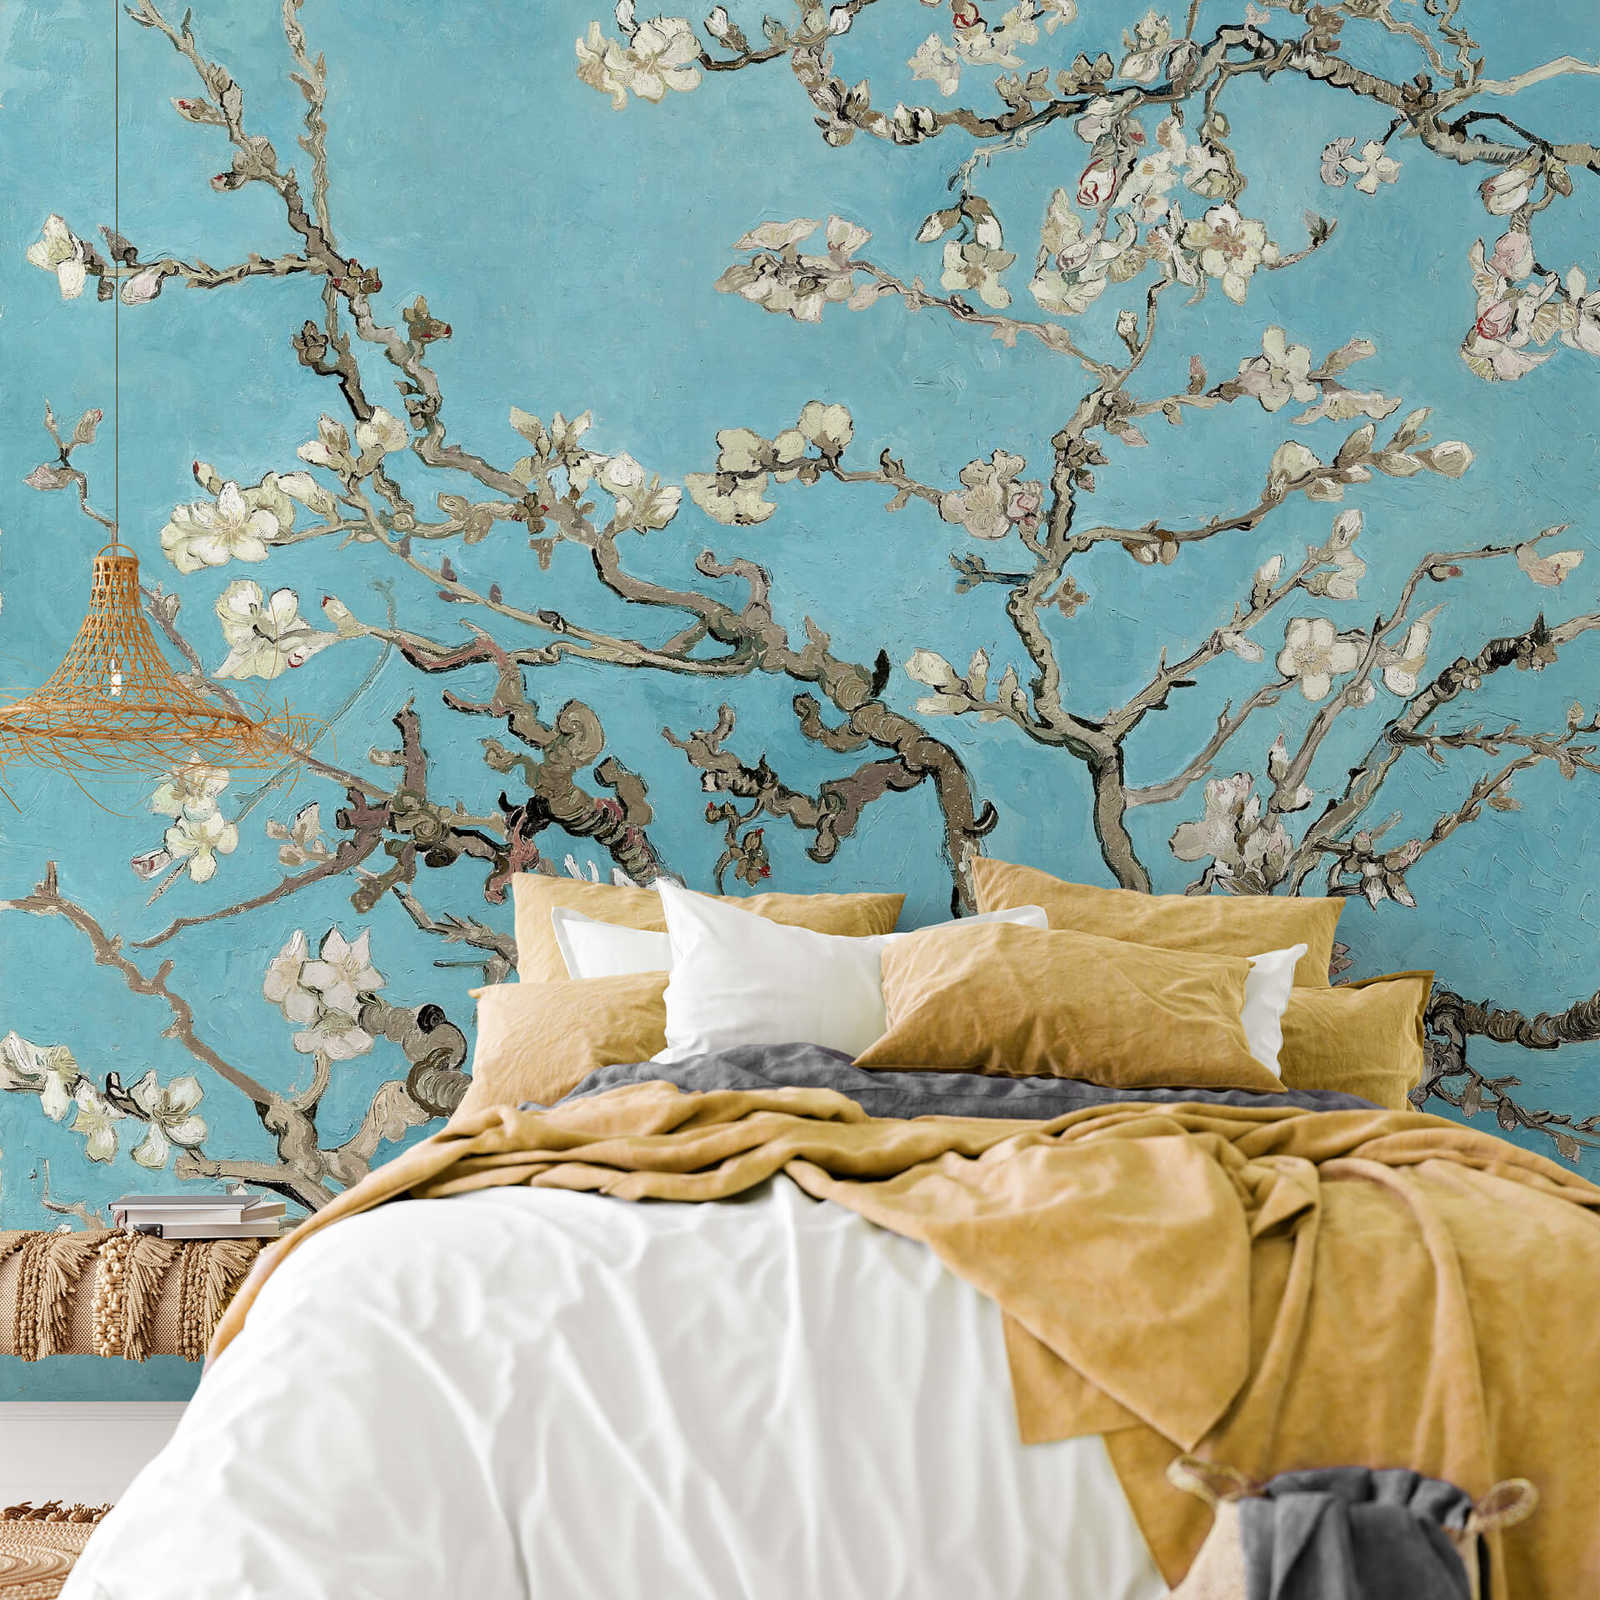             Photo wallpaper almond blossoms - blue, brown, white
        